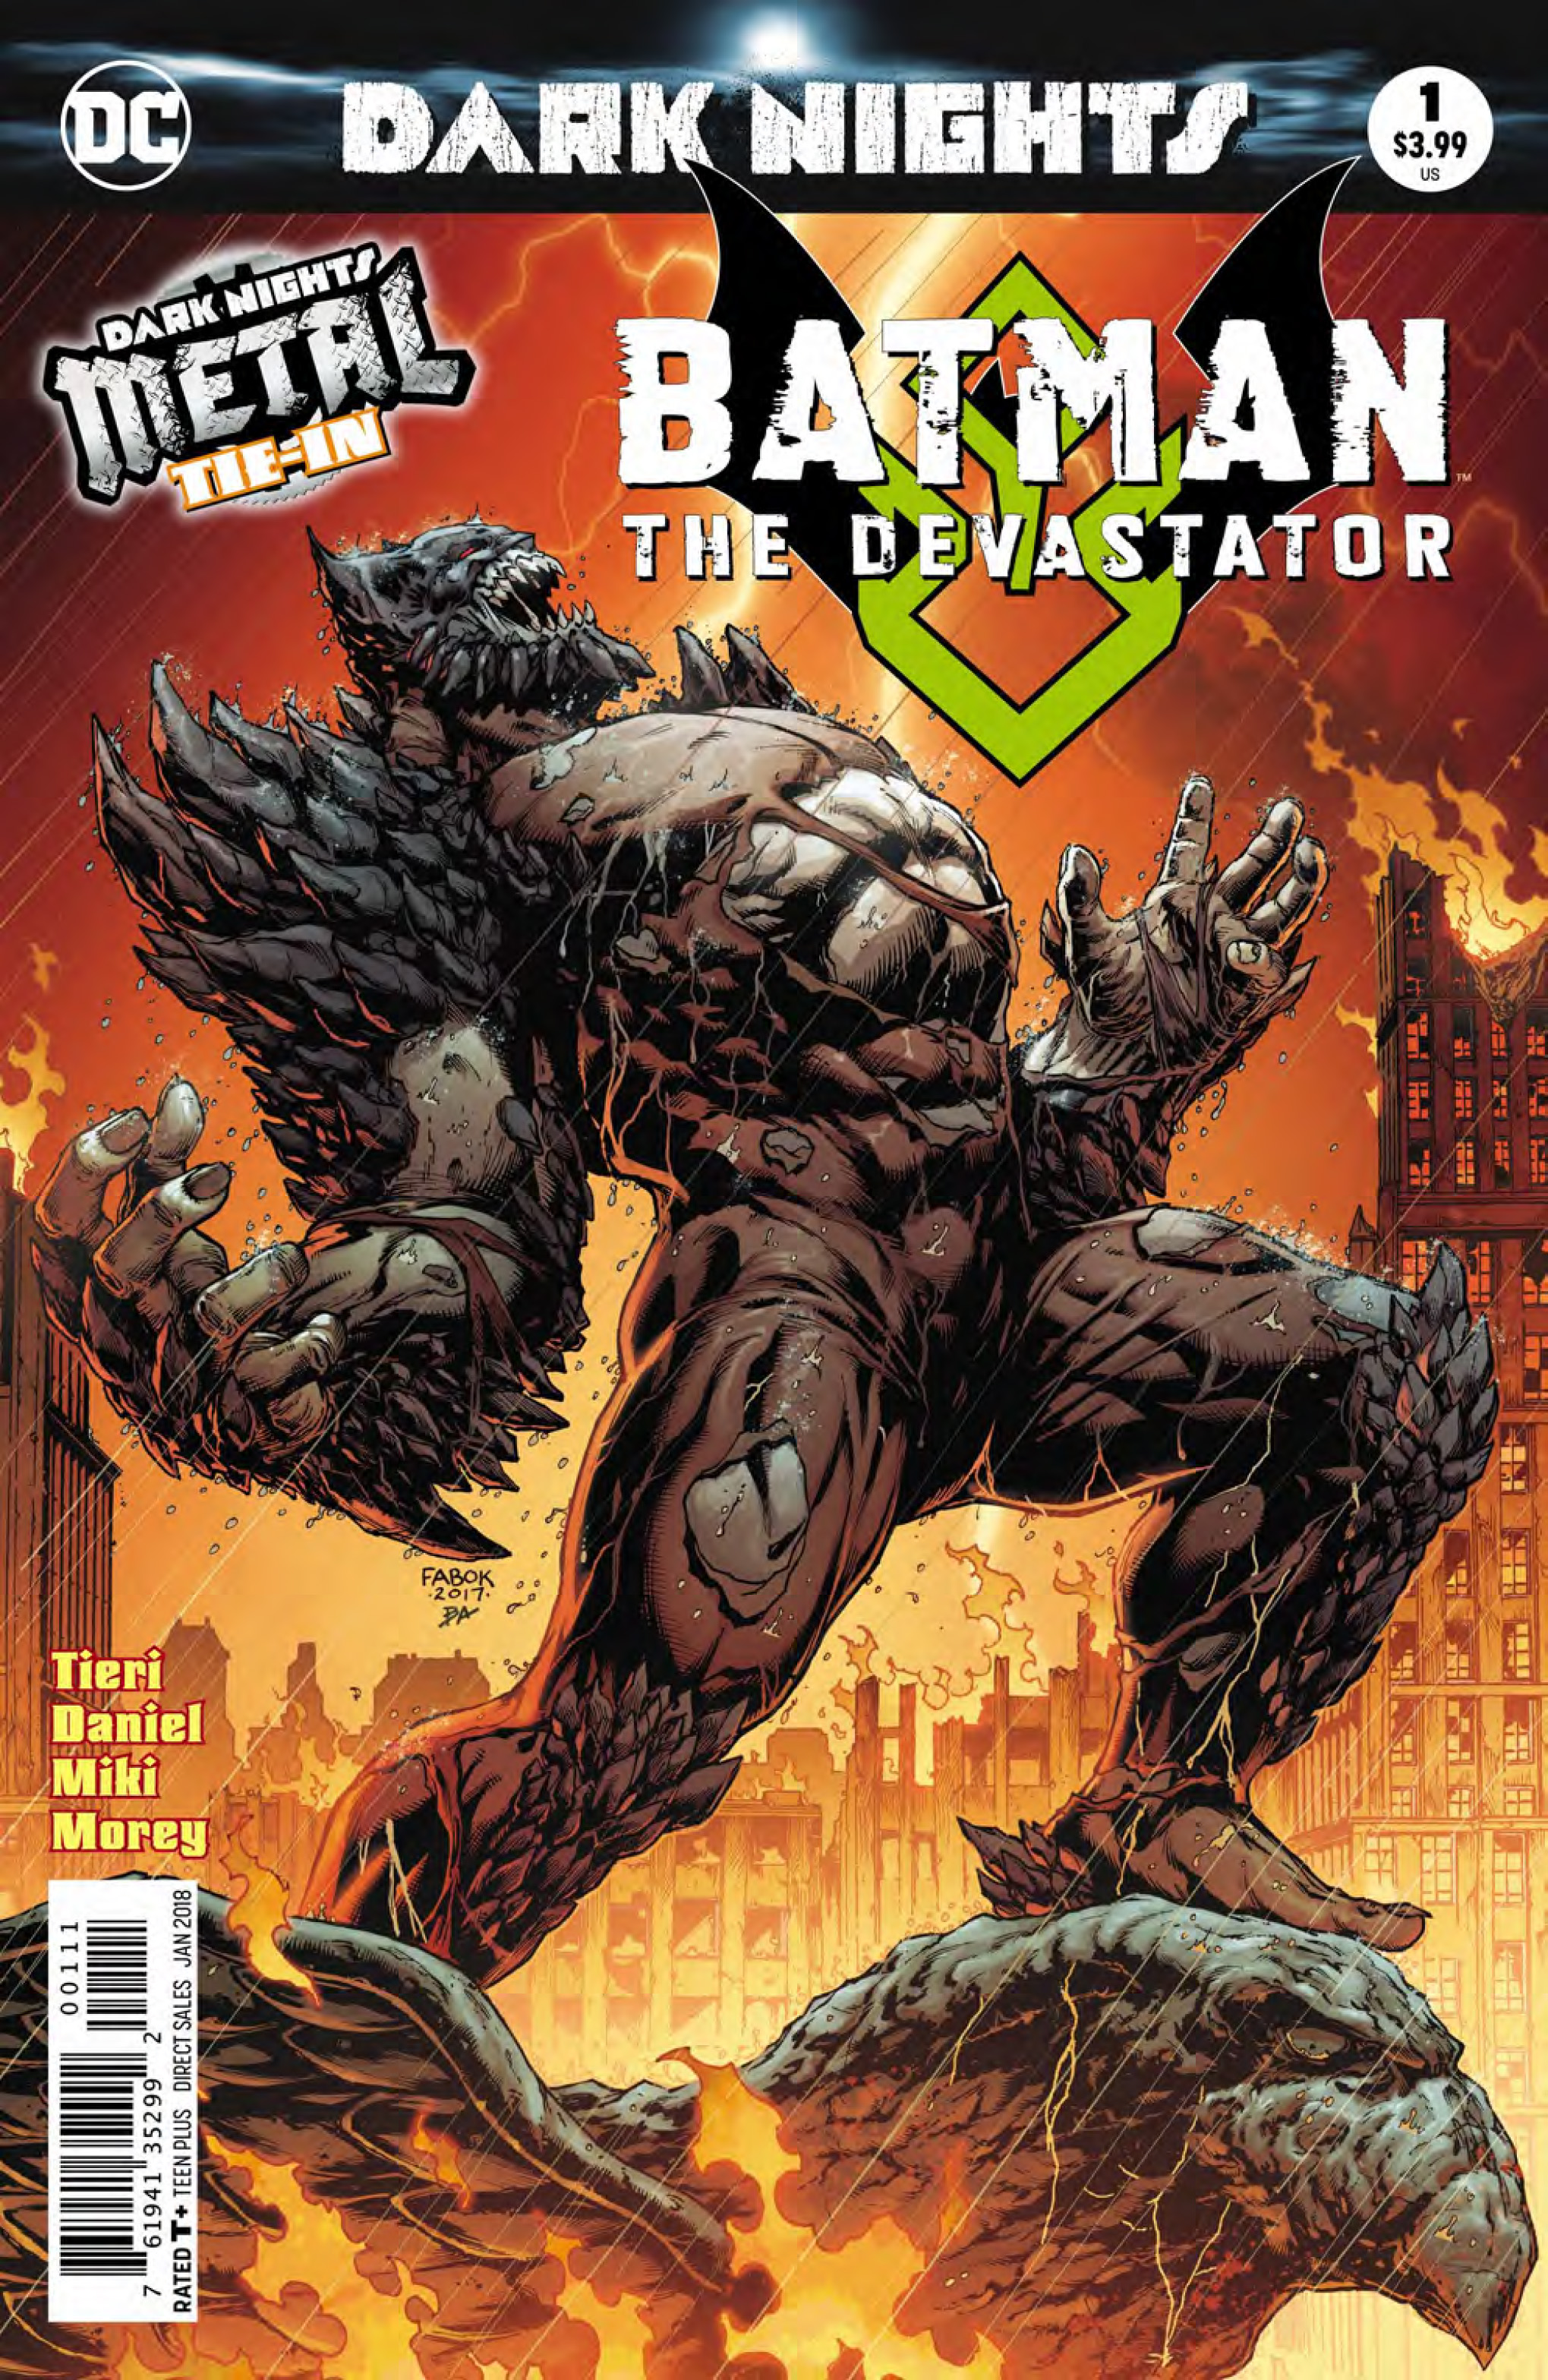 BATMAN THE DEVASTATOR #1 cover